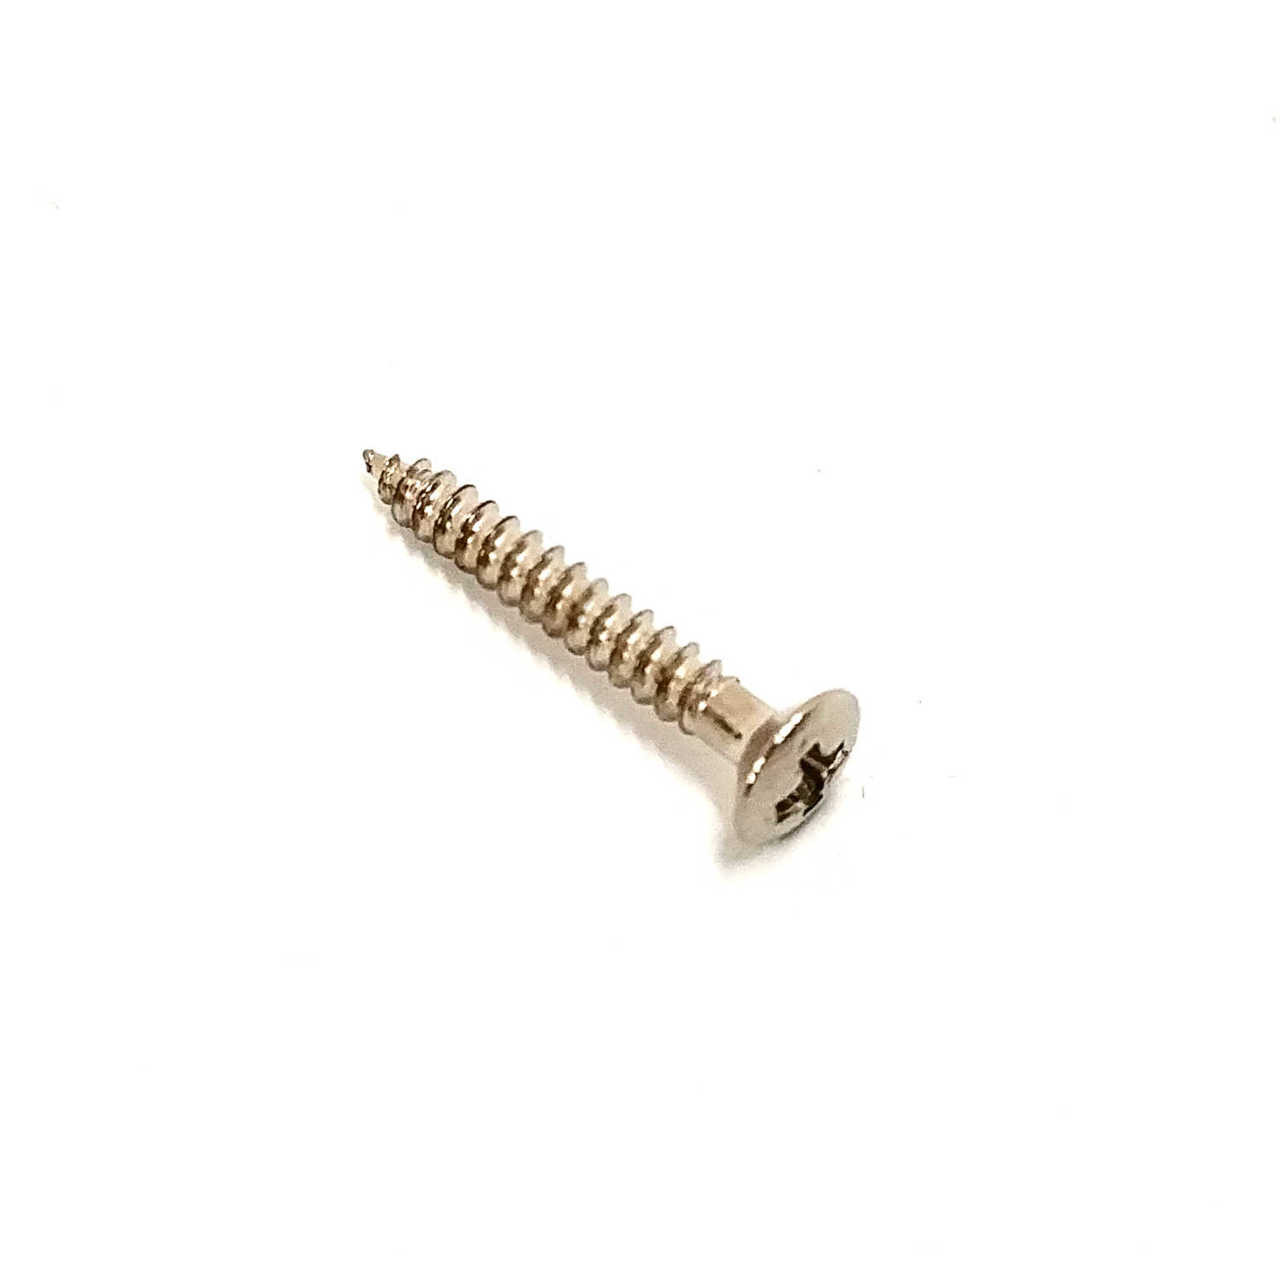 Humbucker Mounting Ring Screws - #2x5/8”, Phillips, Oval, Nickel